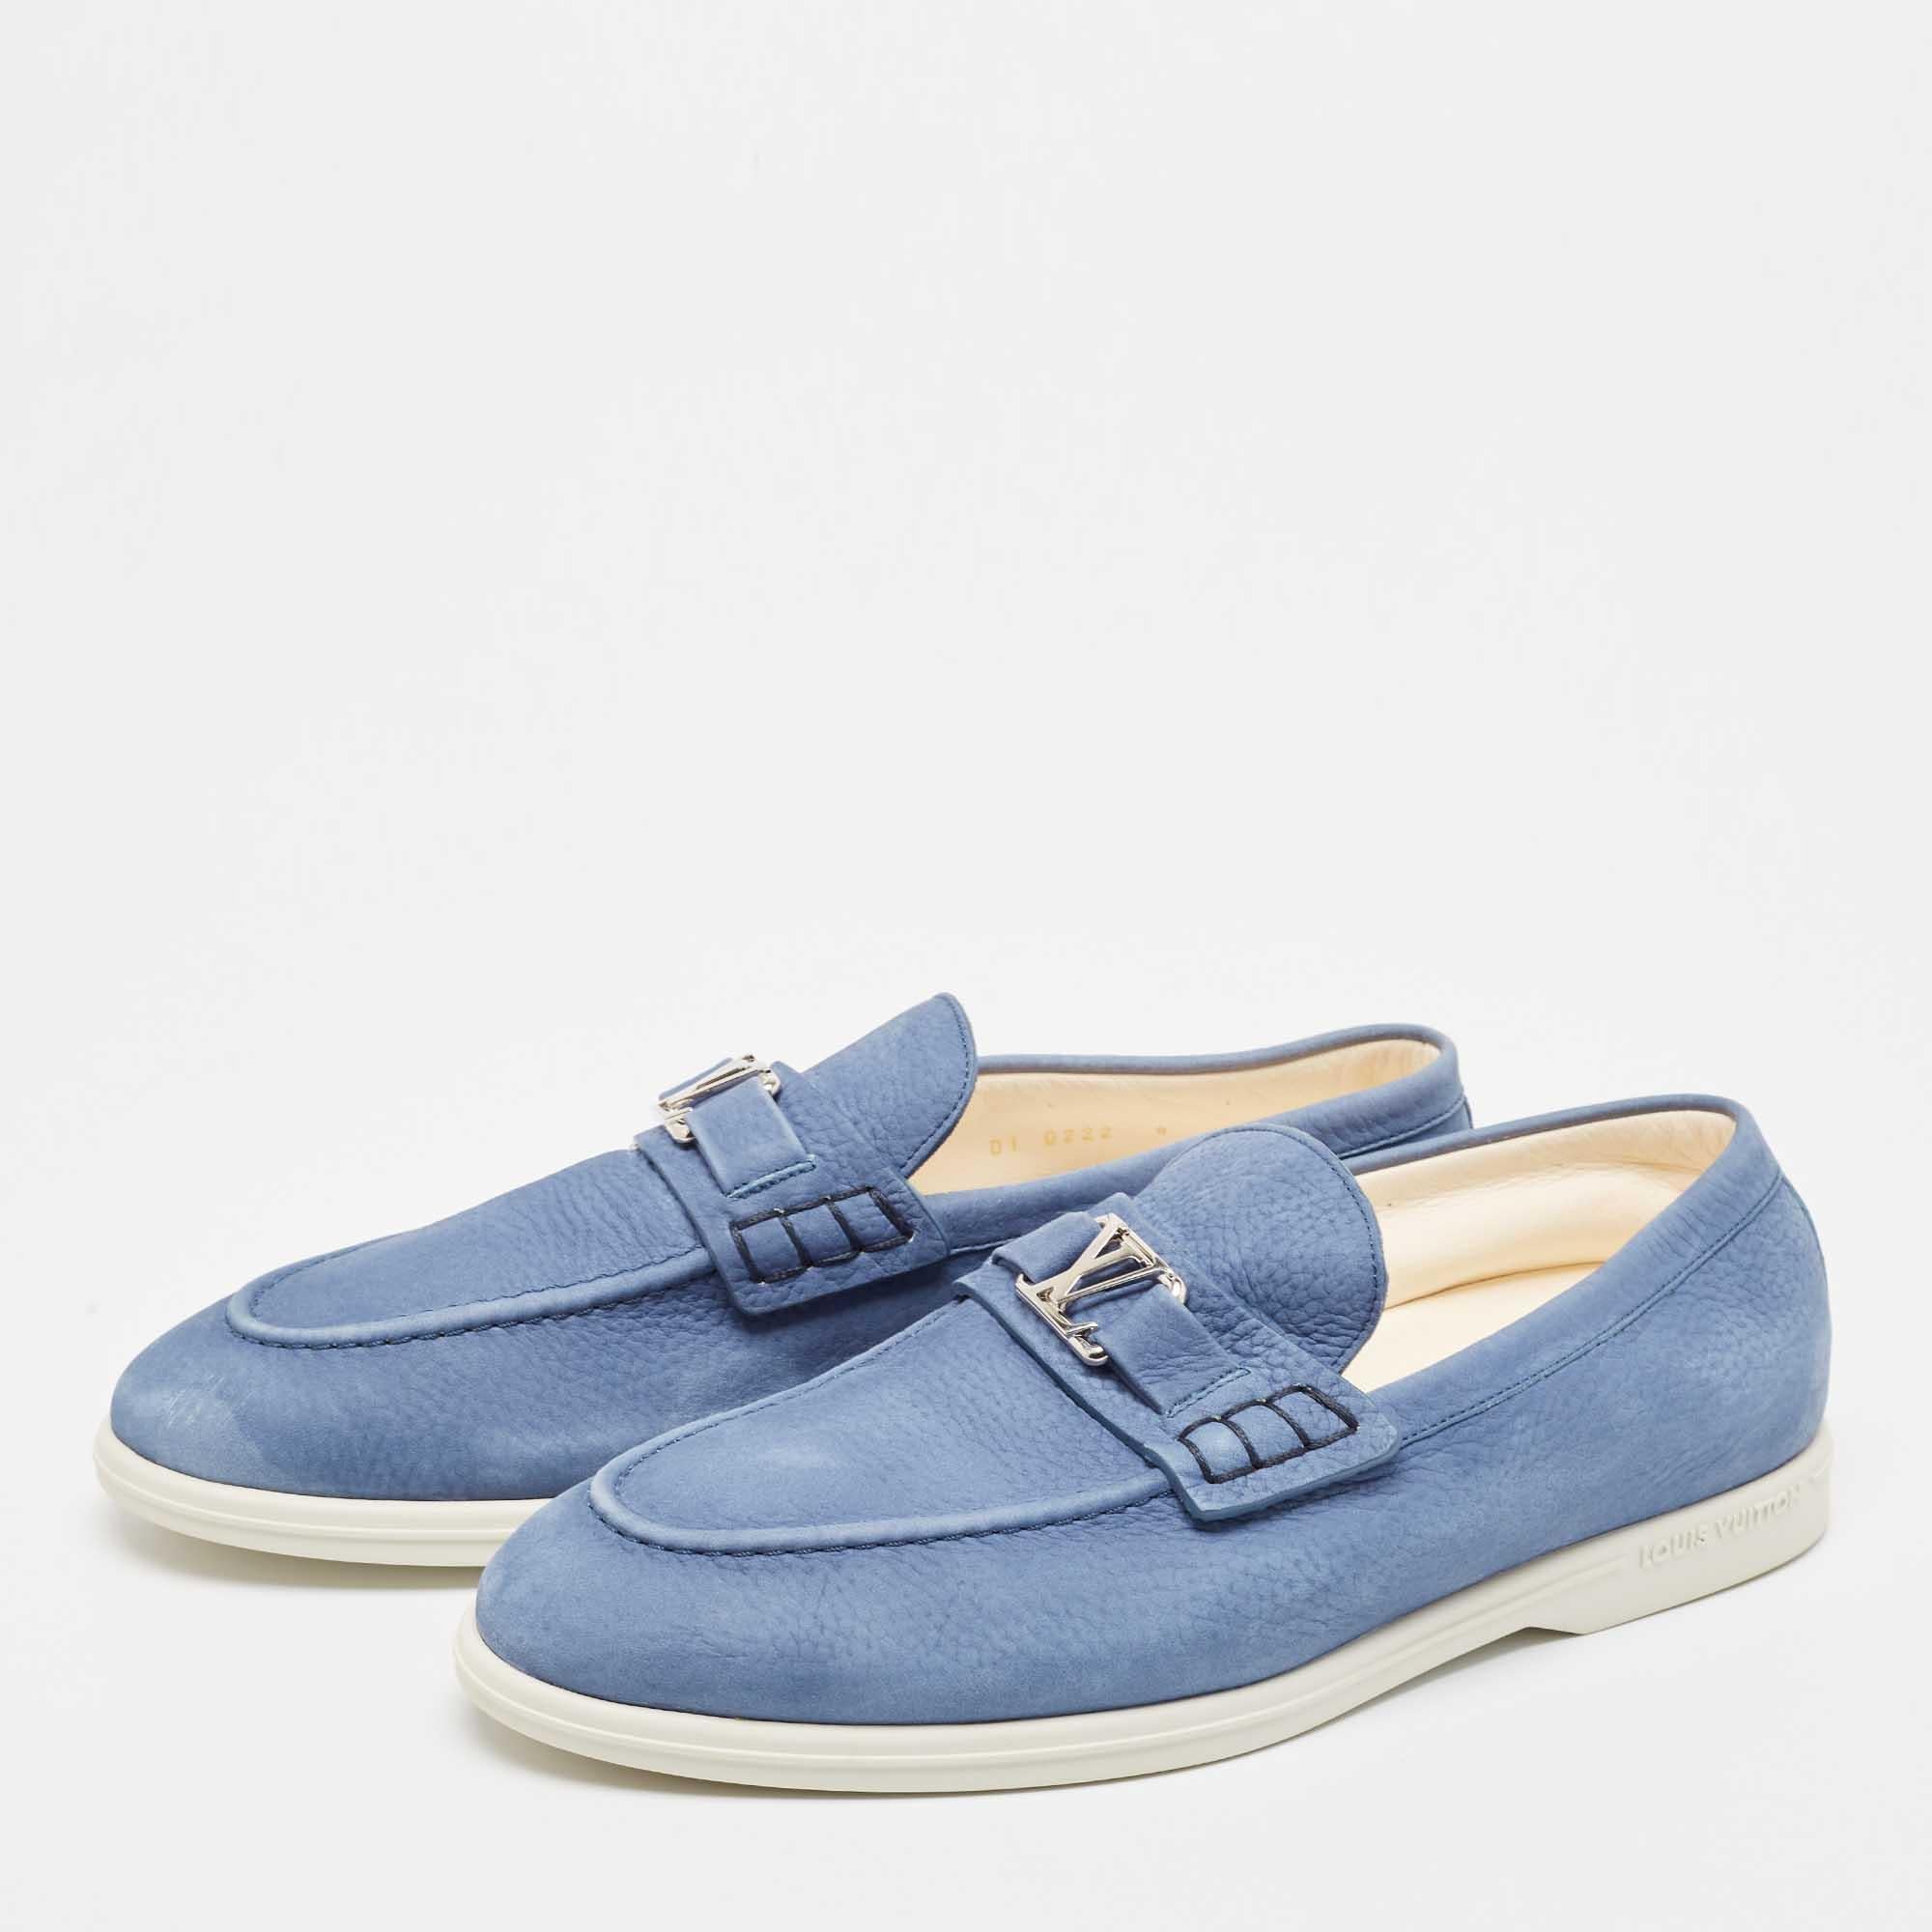 Louis Vuitton Blue Nubuck Leather Estate Loafers Size 42 3